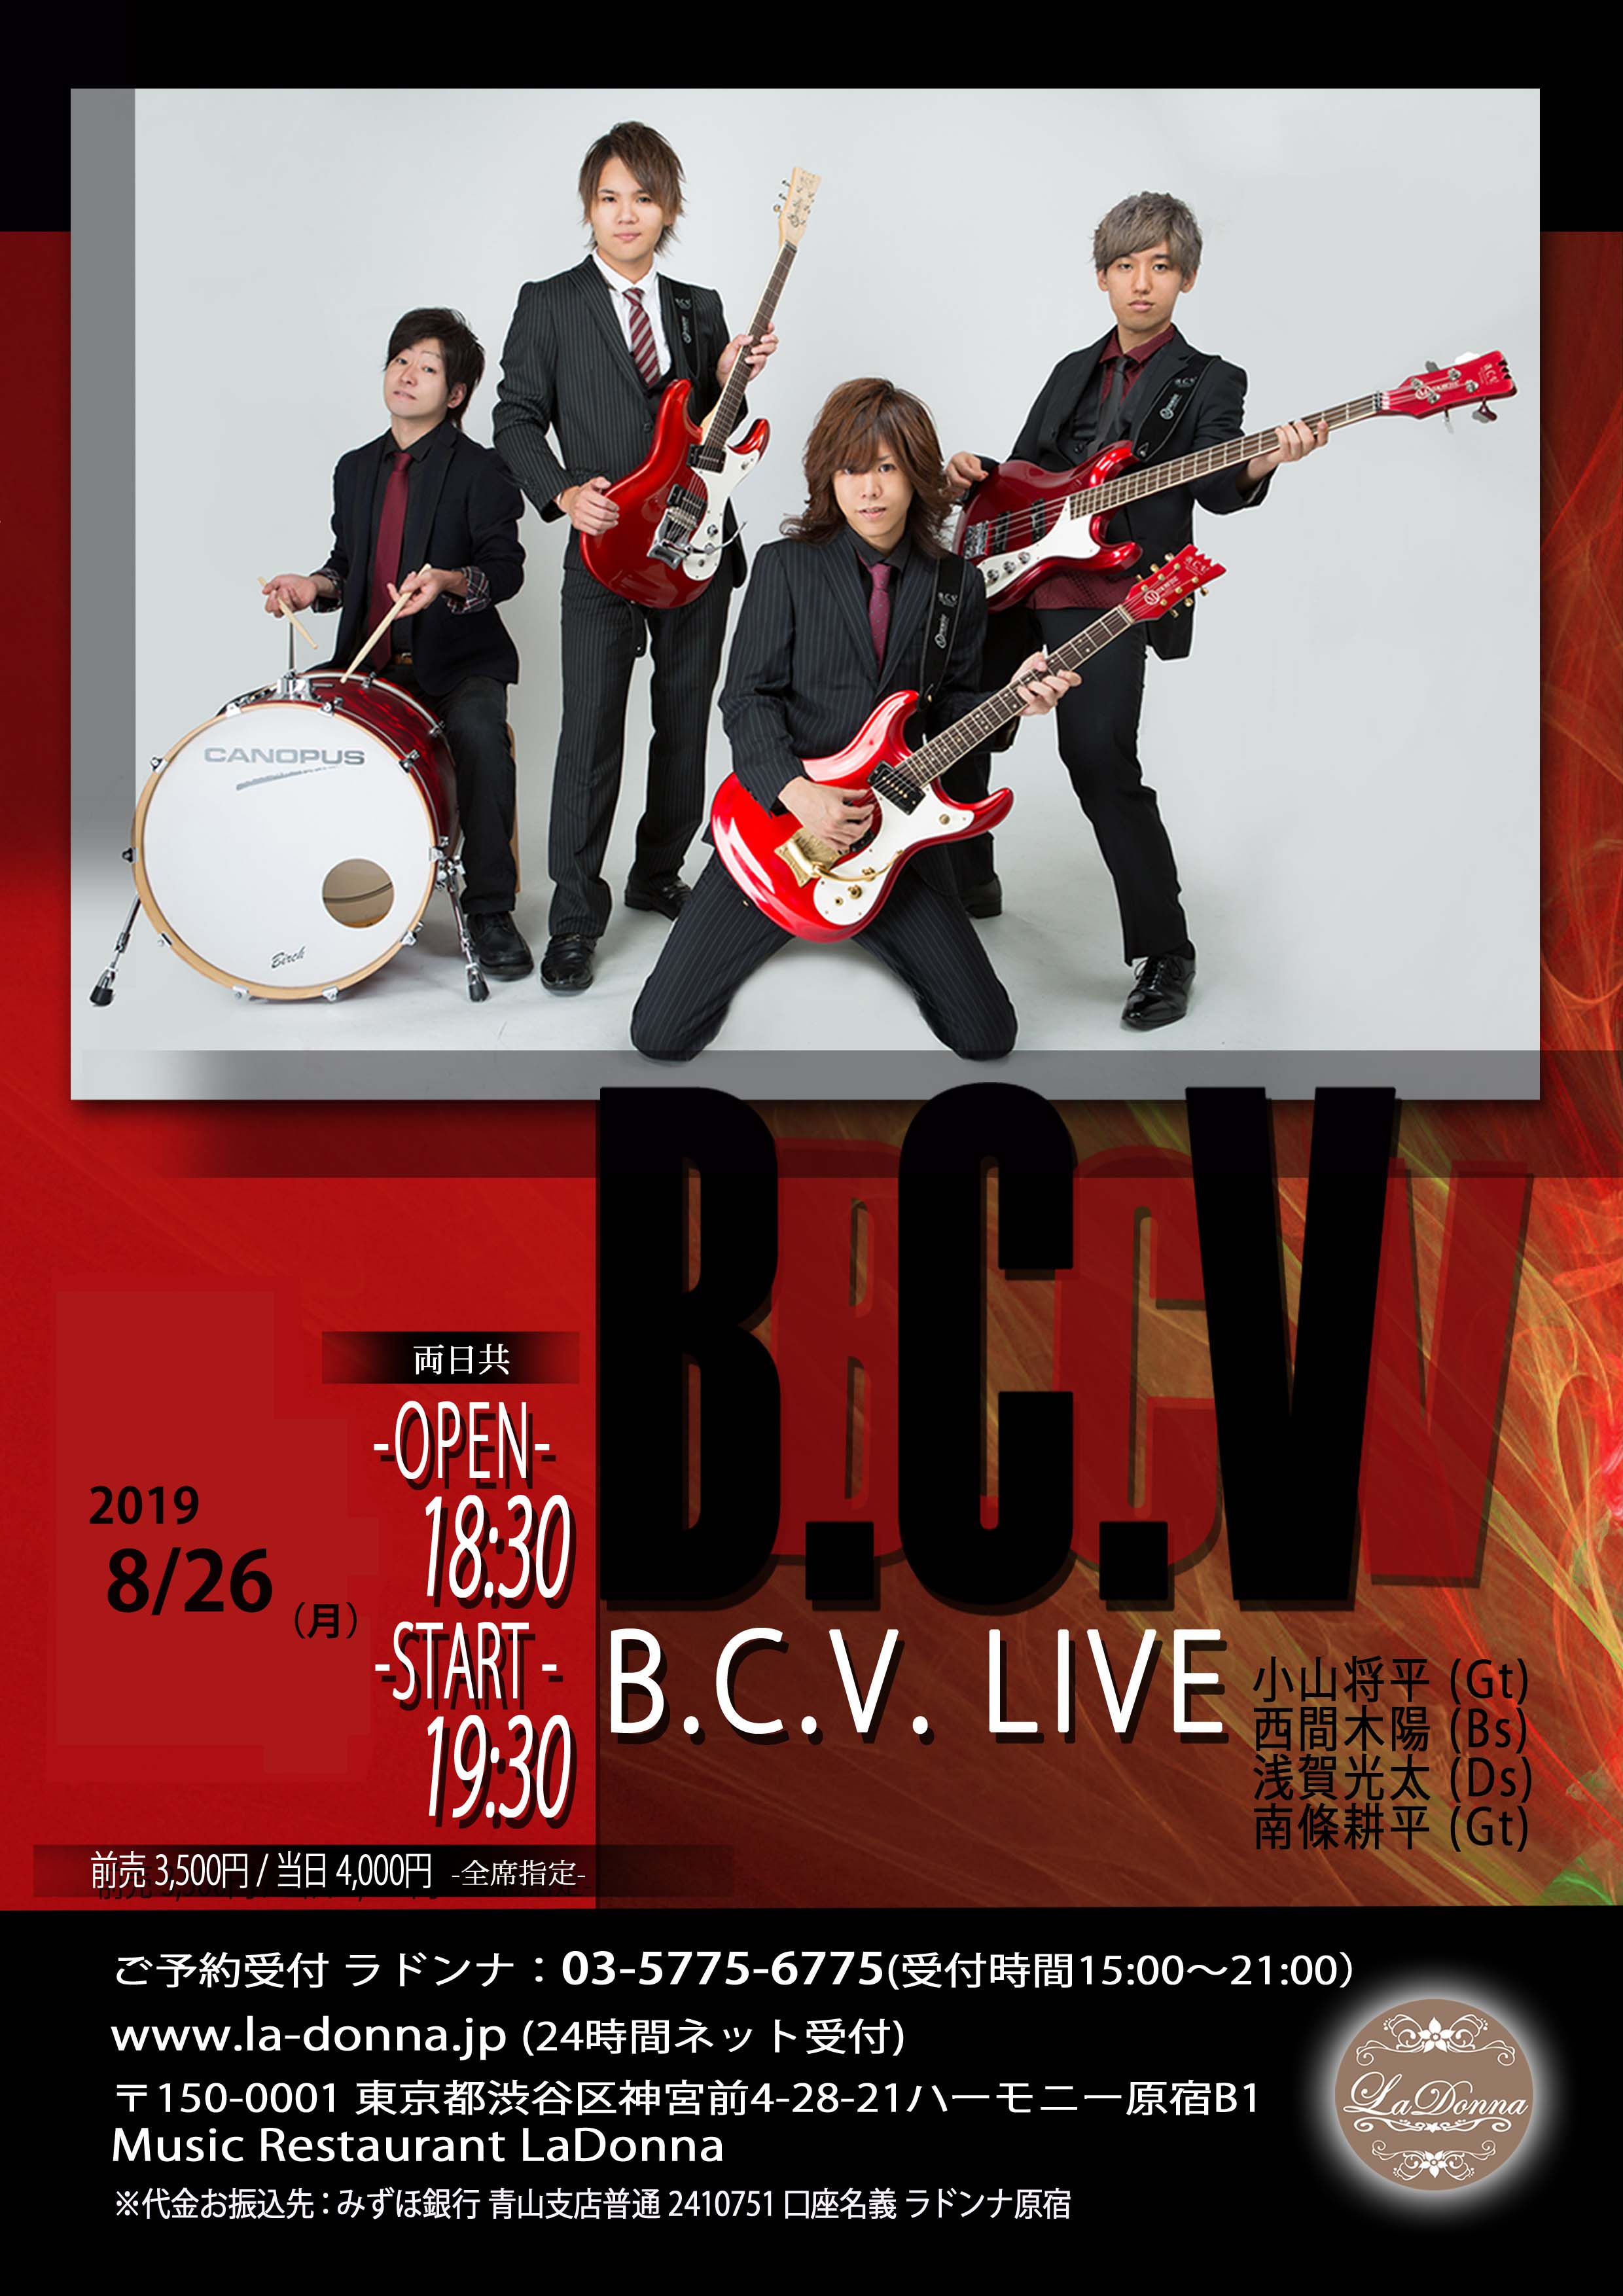 B.C.V. LIVE